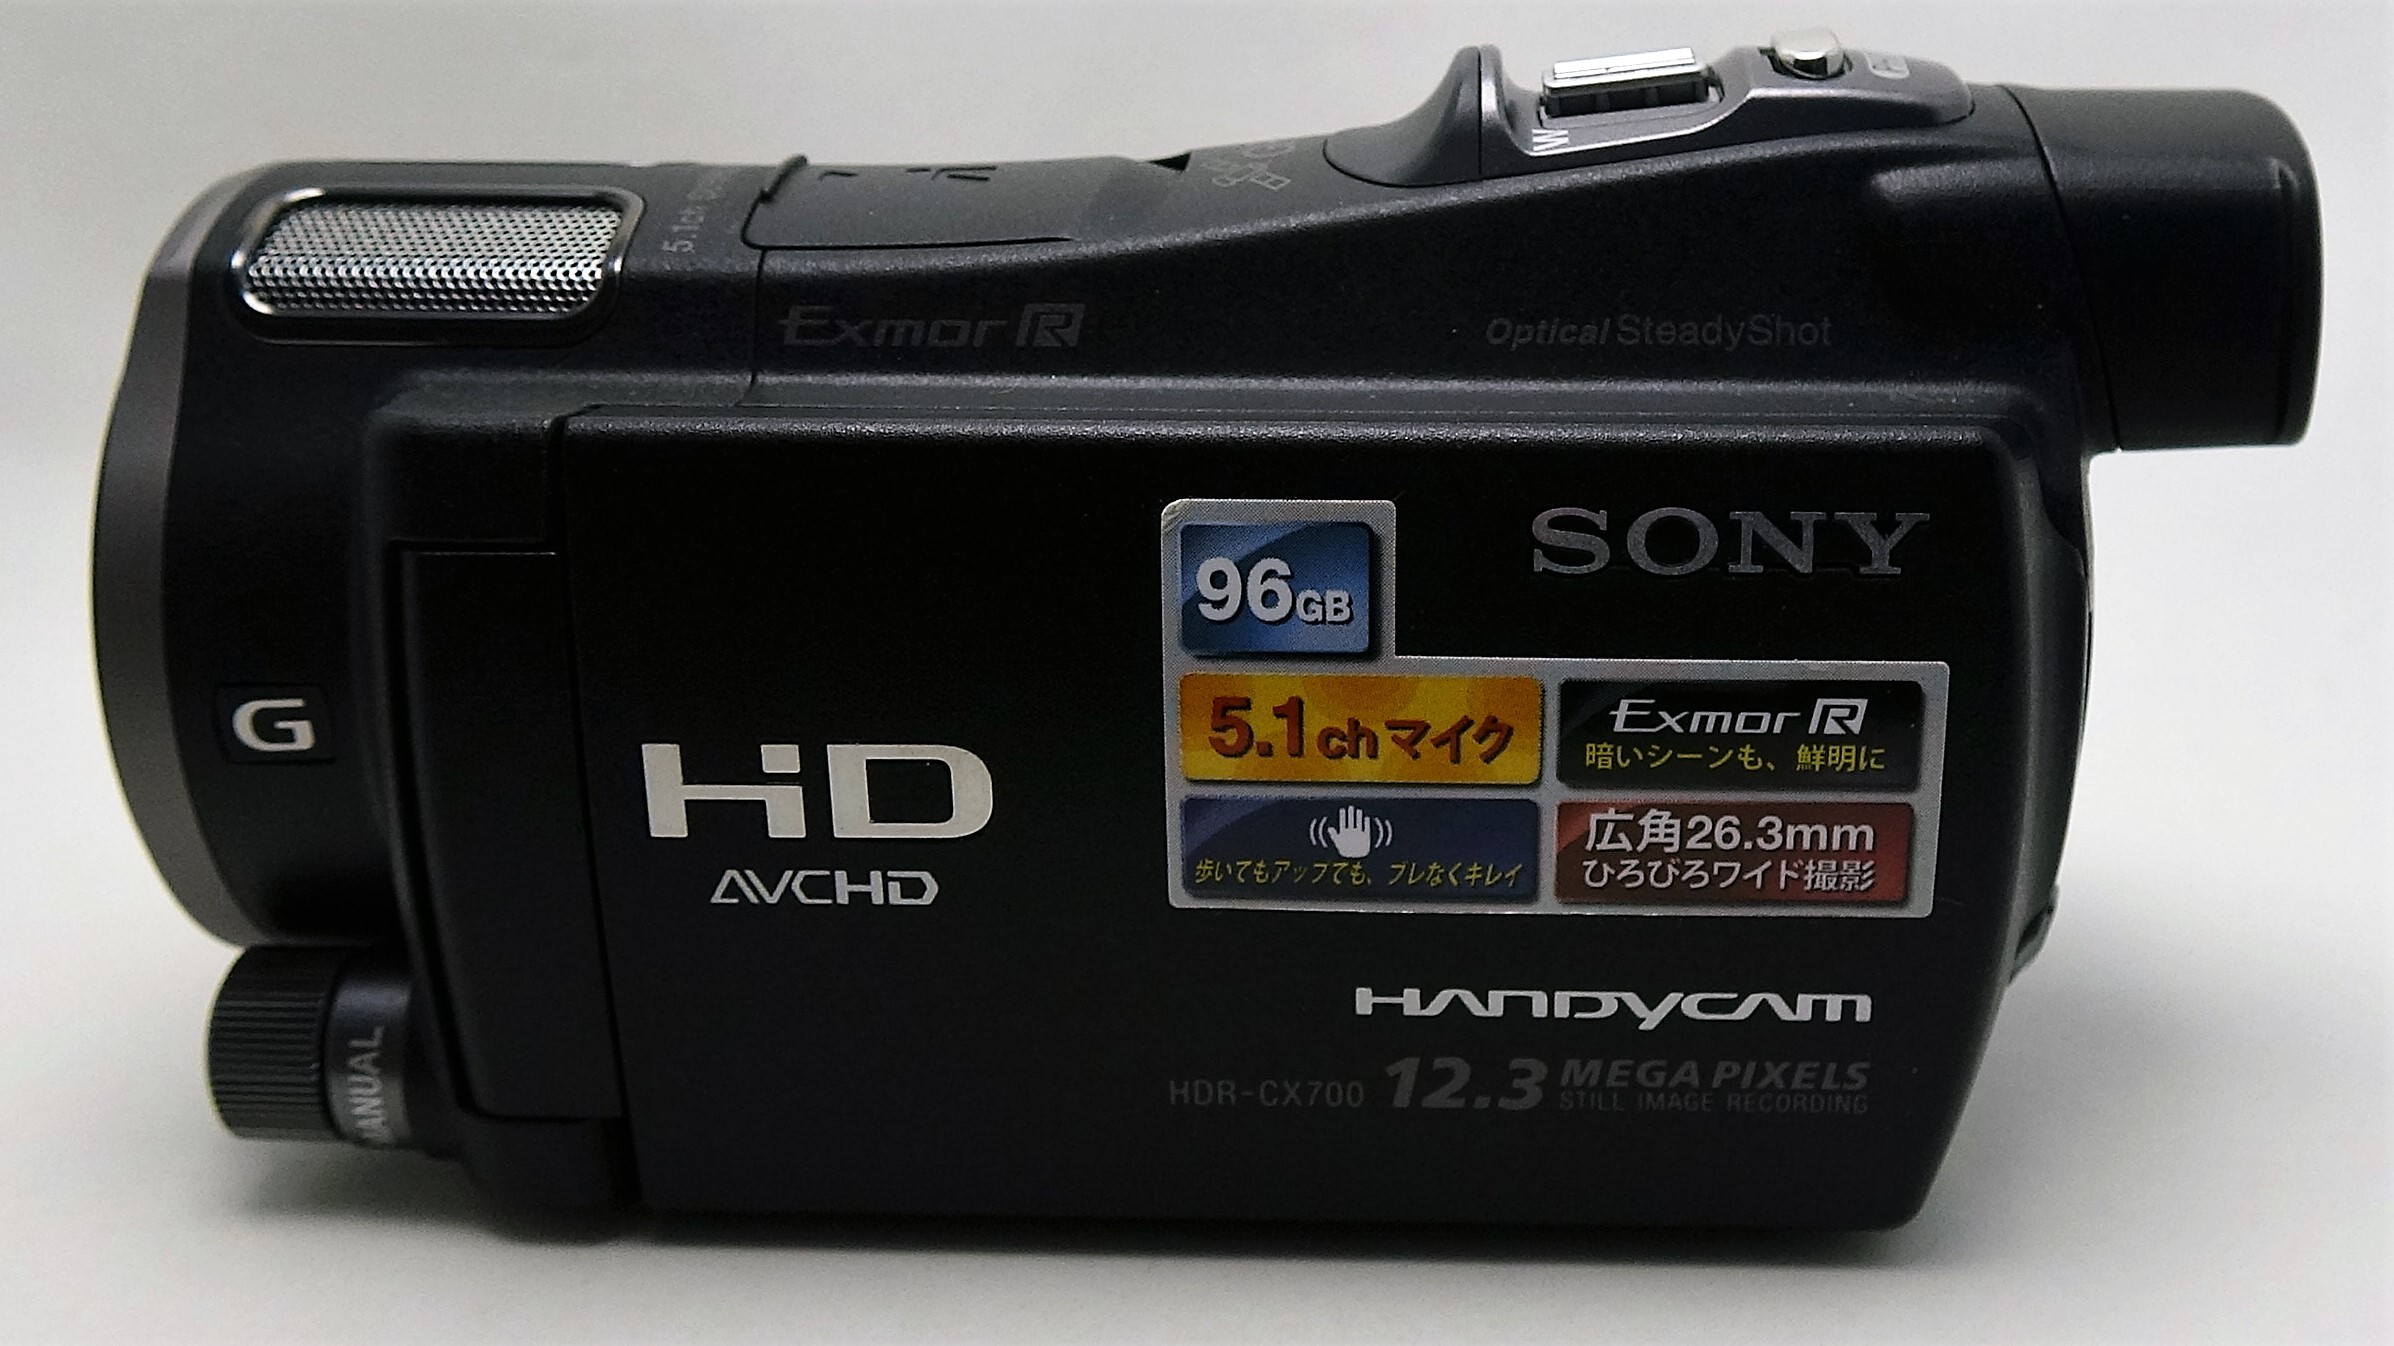 HDR-CX700V-Sony-Handycam-フォーマットしたハンディカムからデータ復元